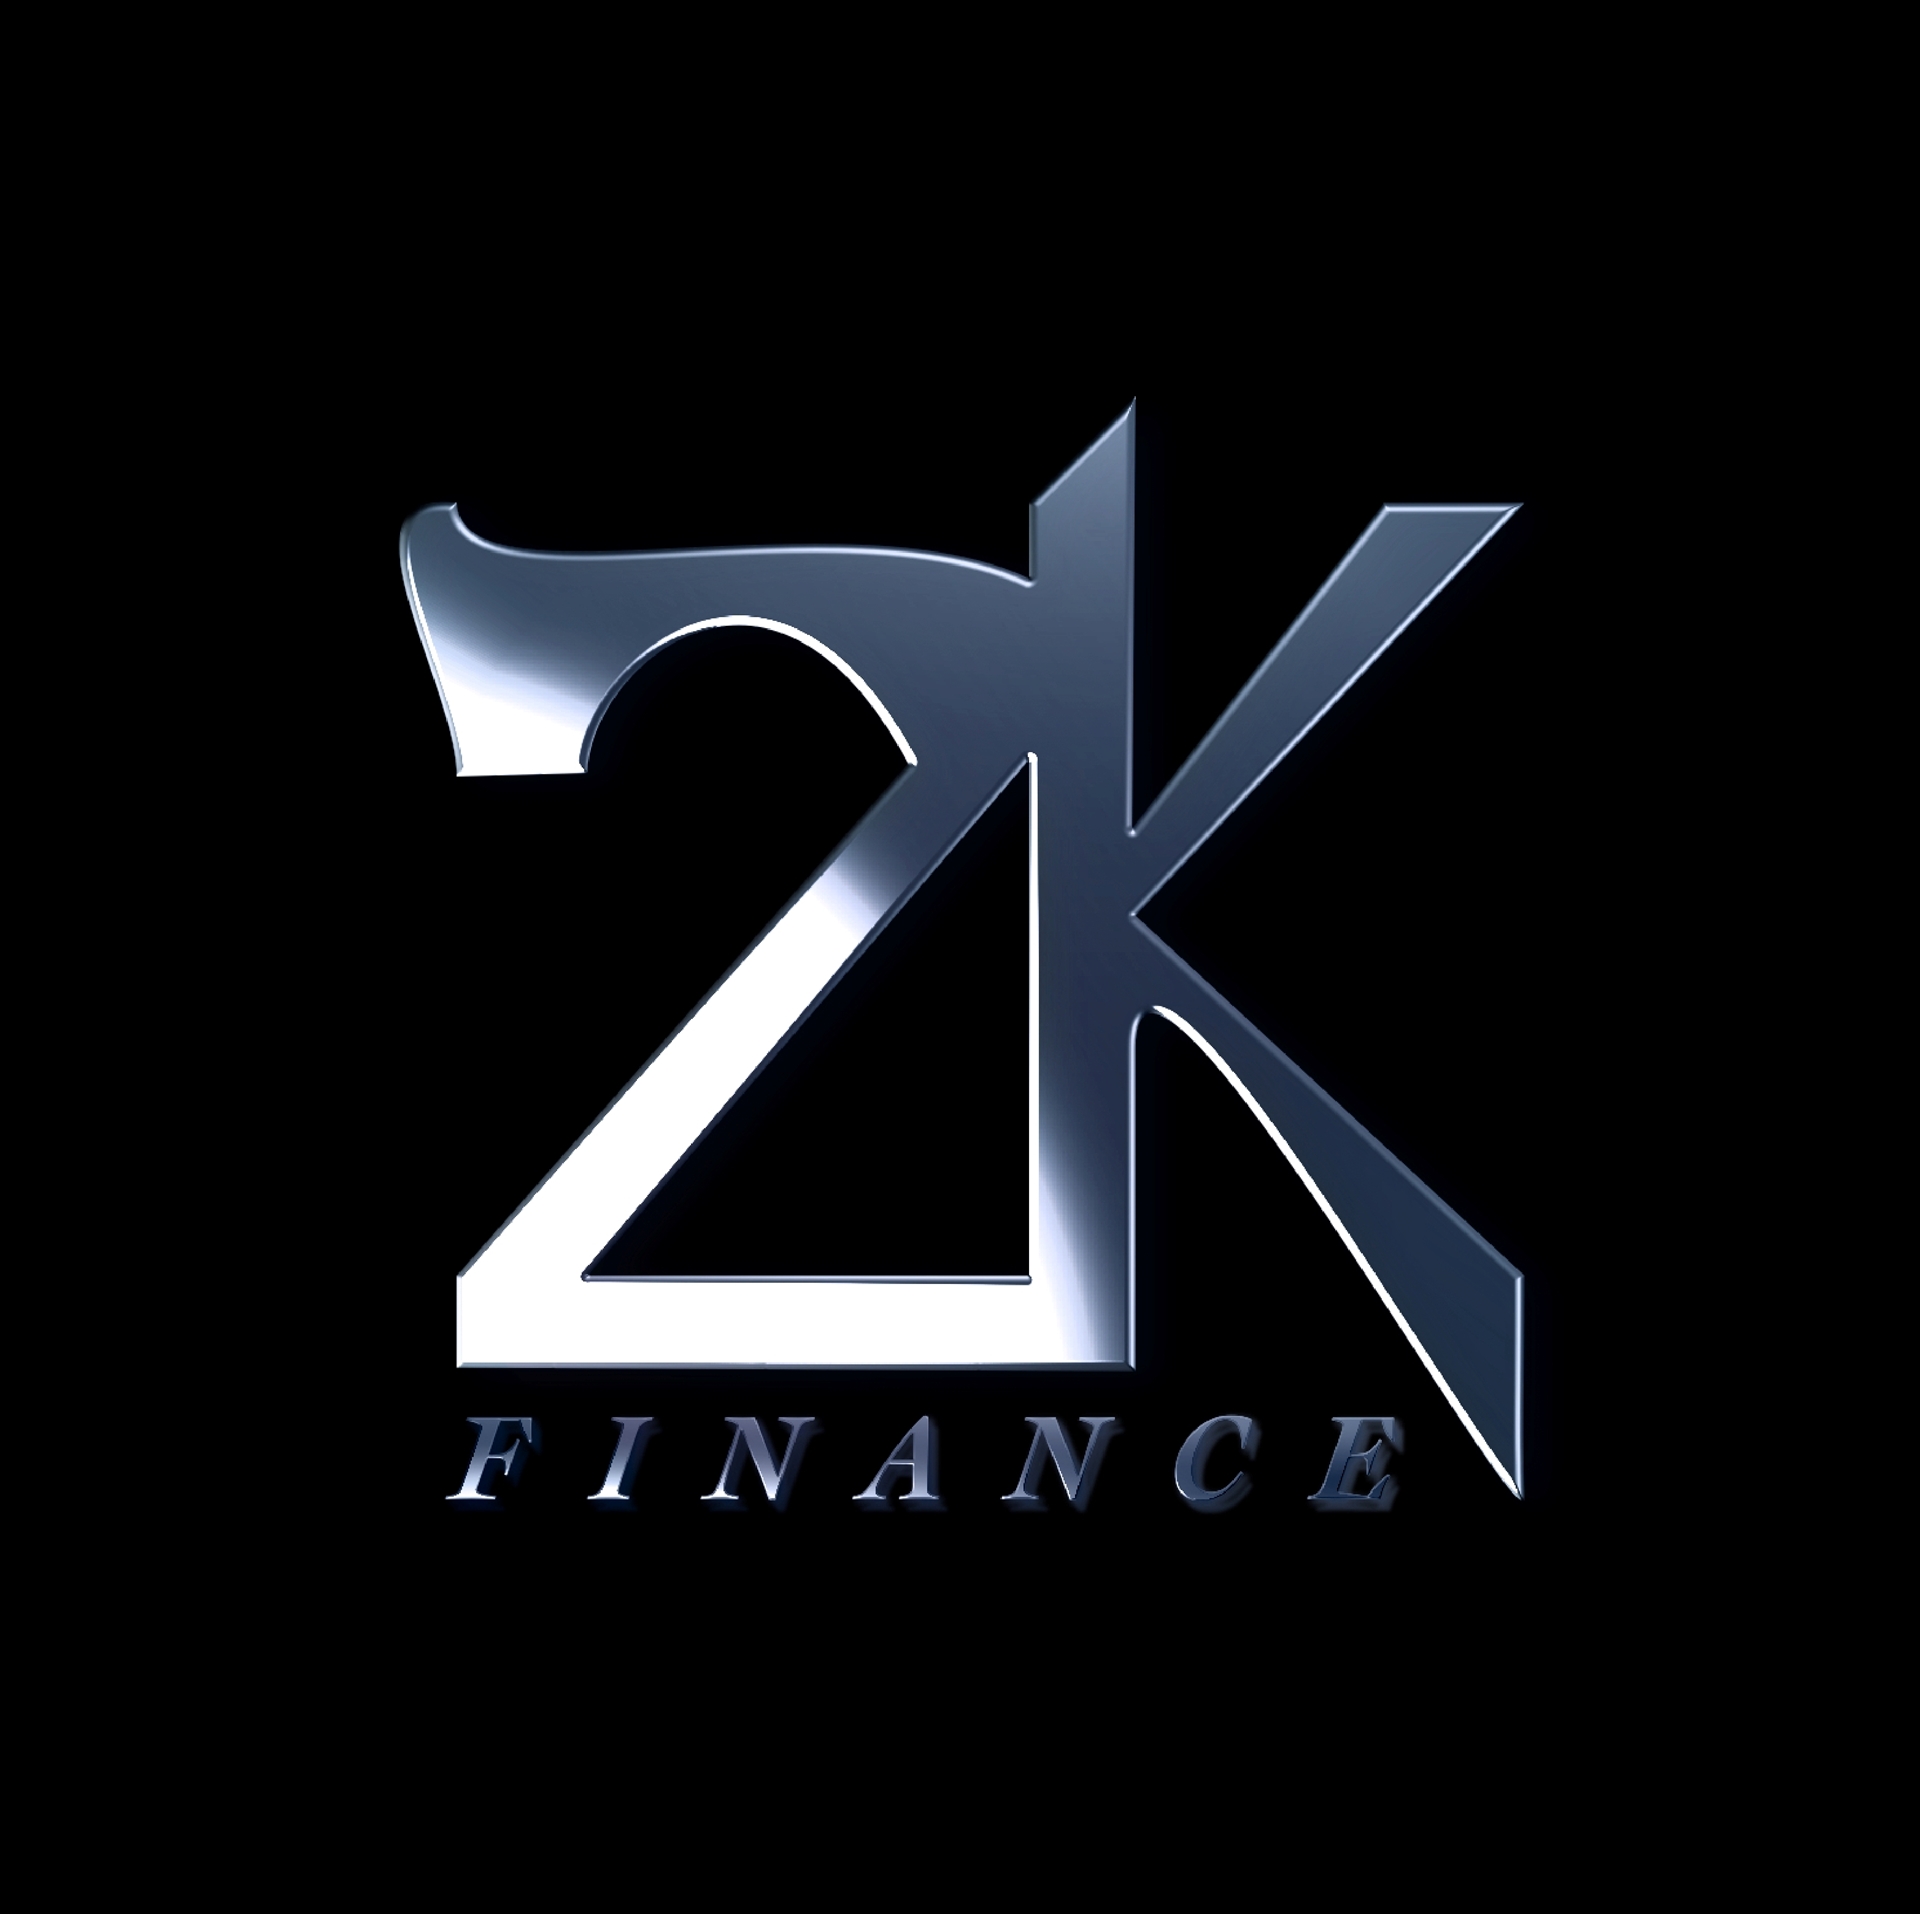 2K Finance logo